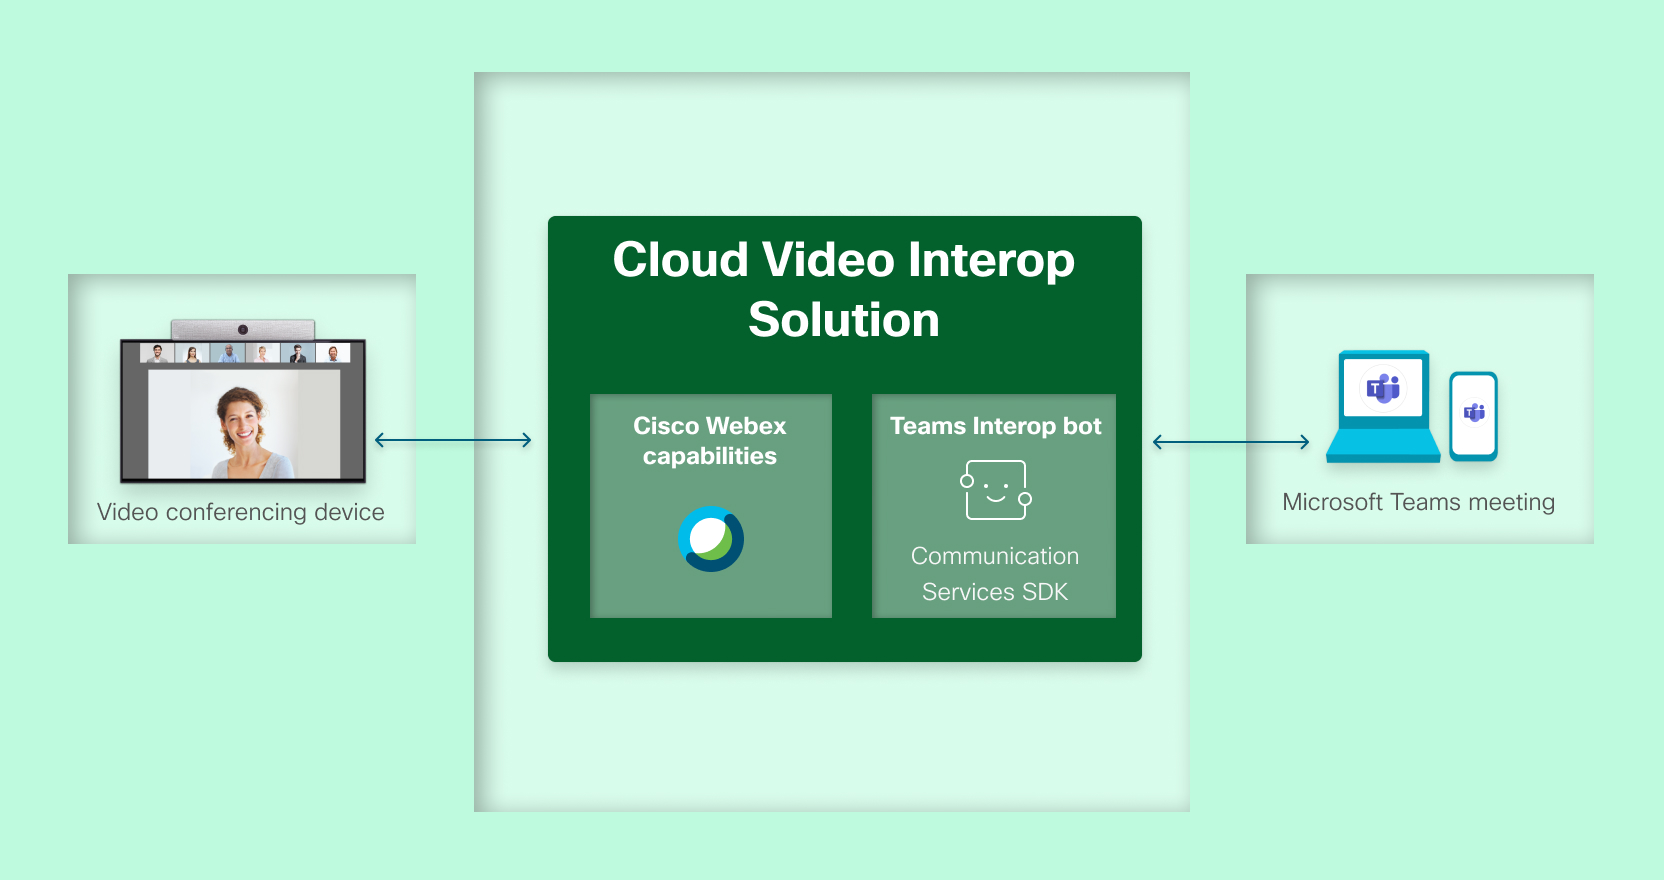 Imagen de arquitectura CVI basada en https://docs.microsoft.com/en-us/microsoftteams/cloud-video-interop